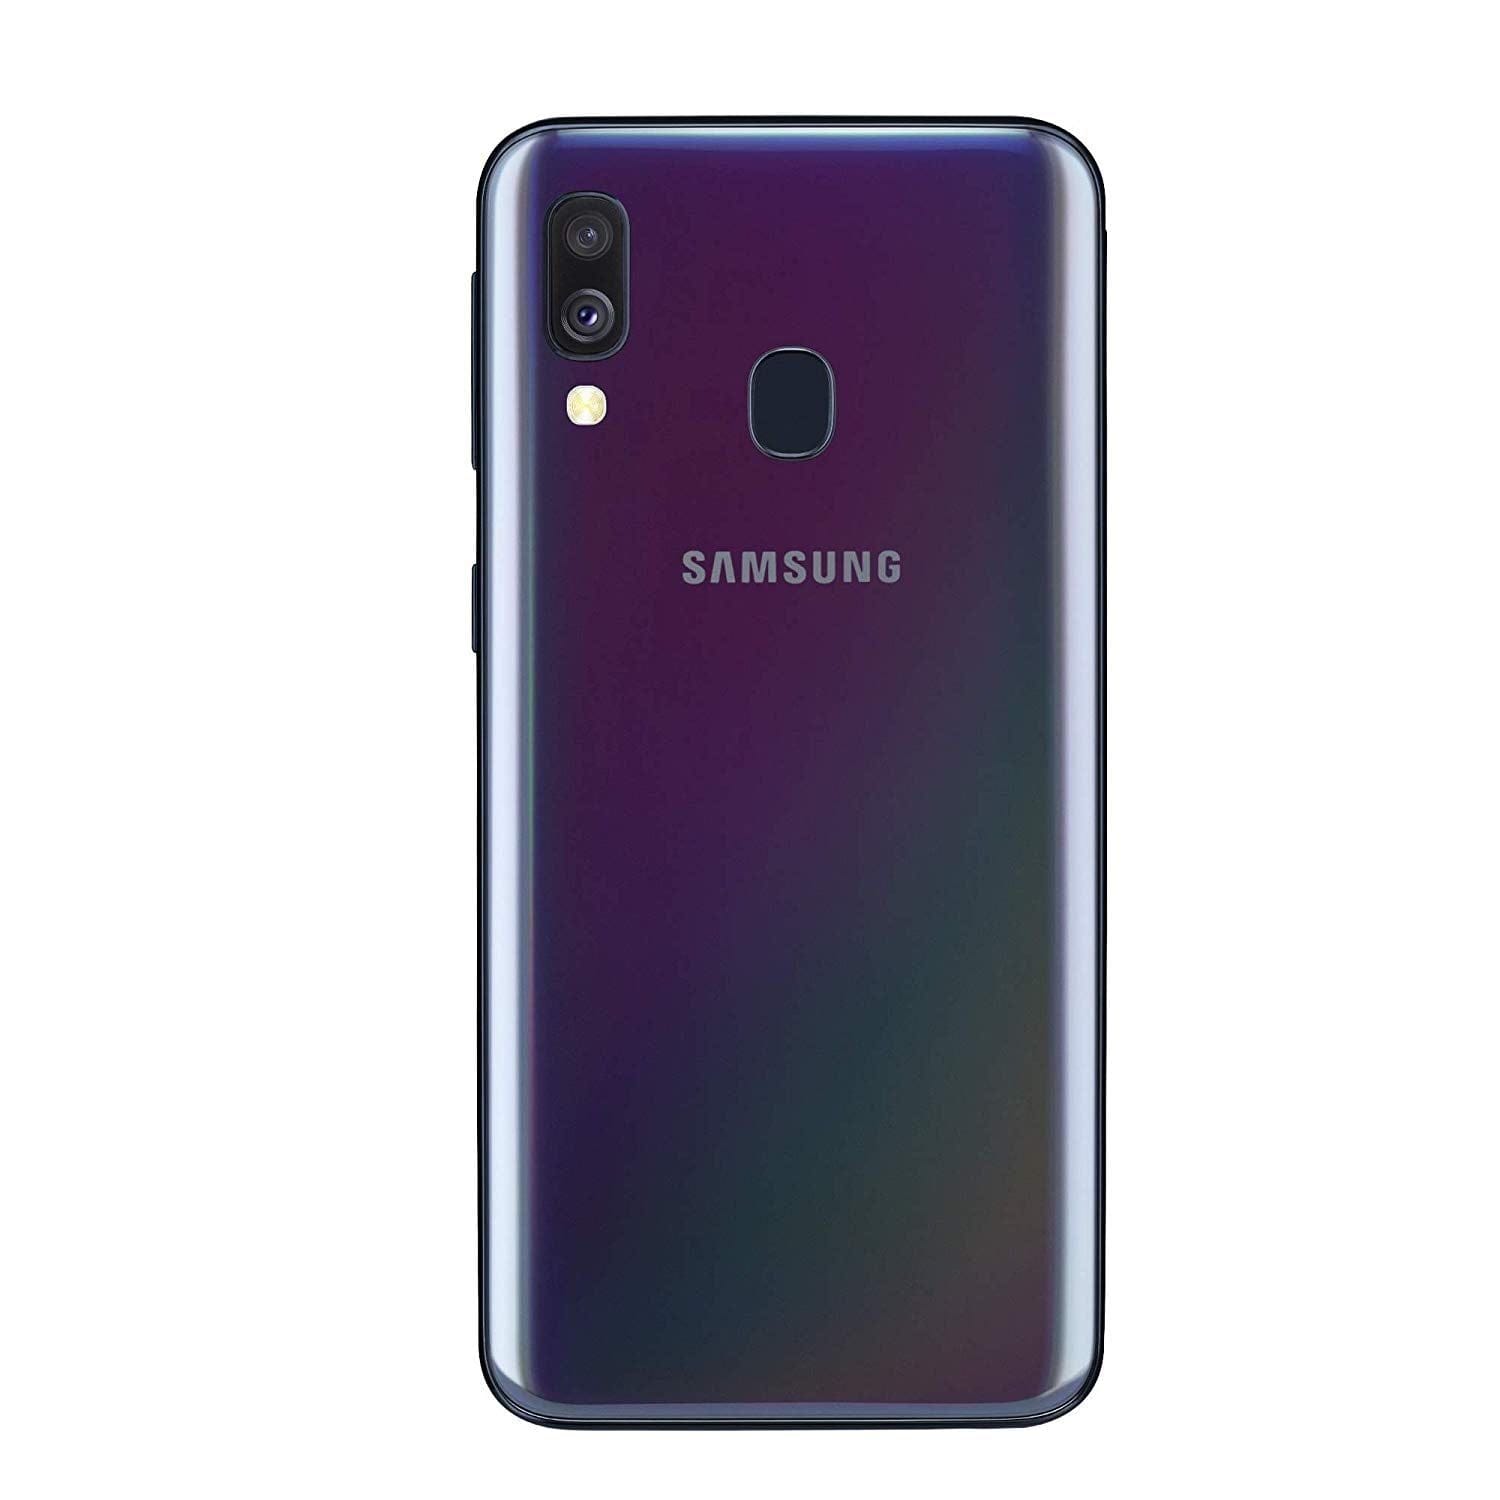 Samsung Smartphone Samsung Galaxy A40, 64 GB, Nero SM-A405FZKDITV (C)